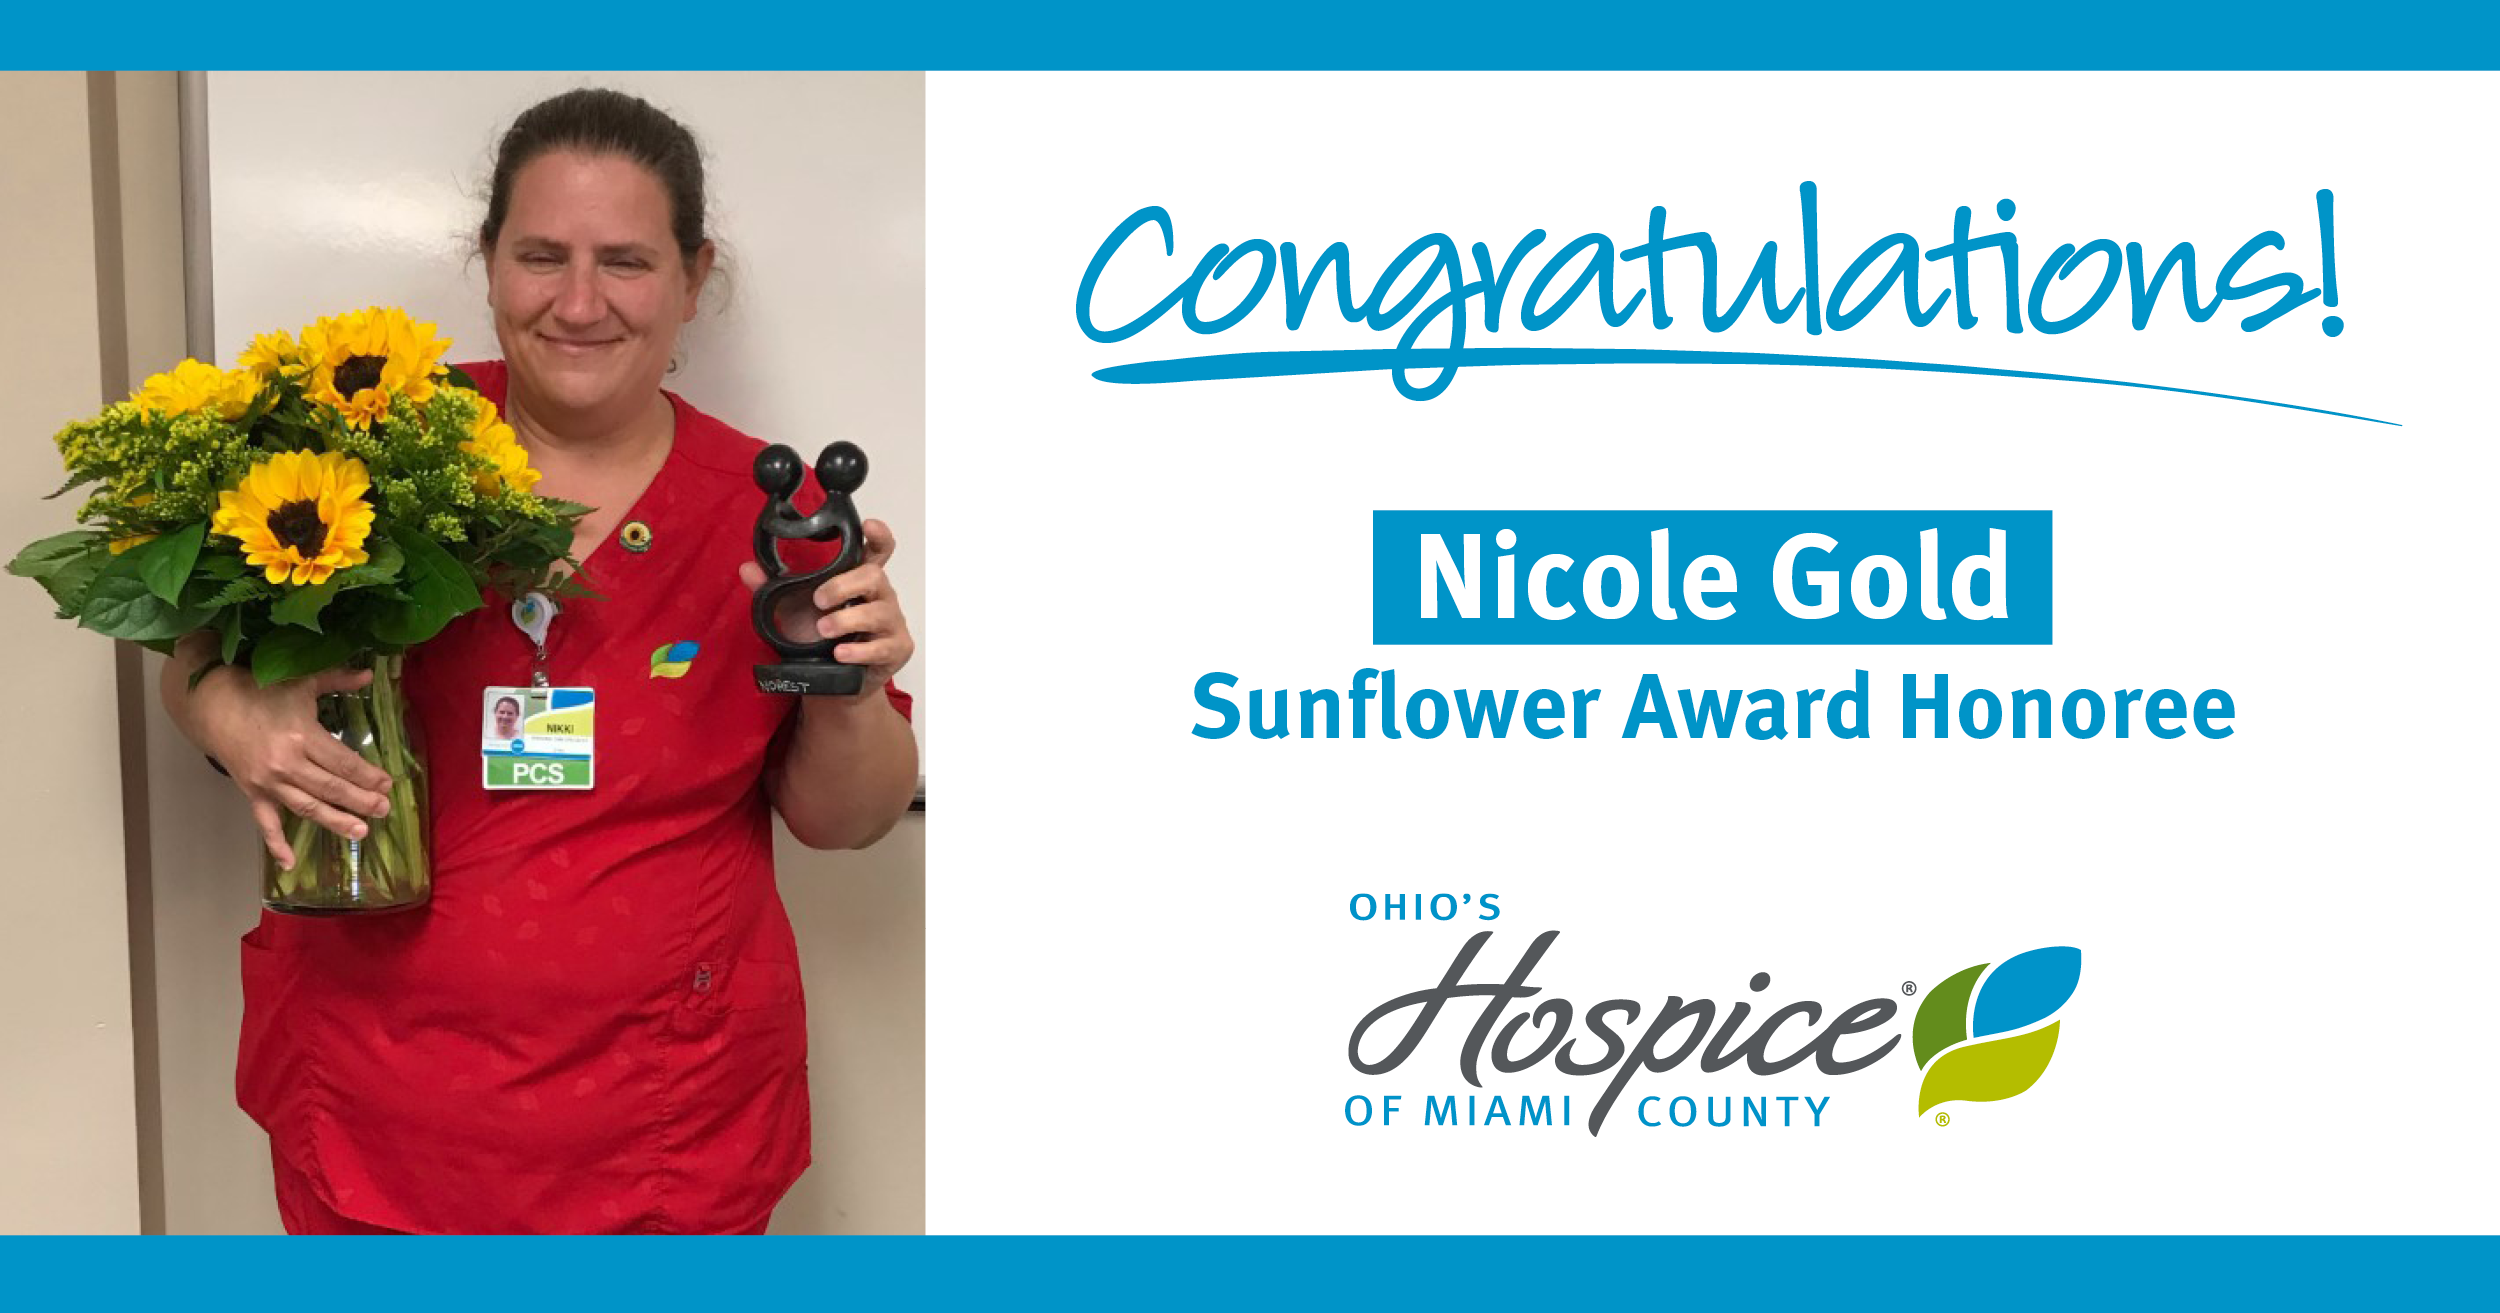 Congratulations to Nicole Gold: Sunflower Award Honoree